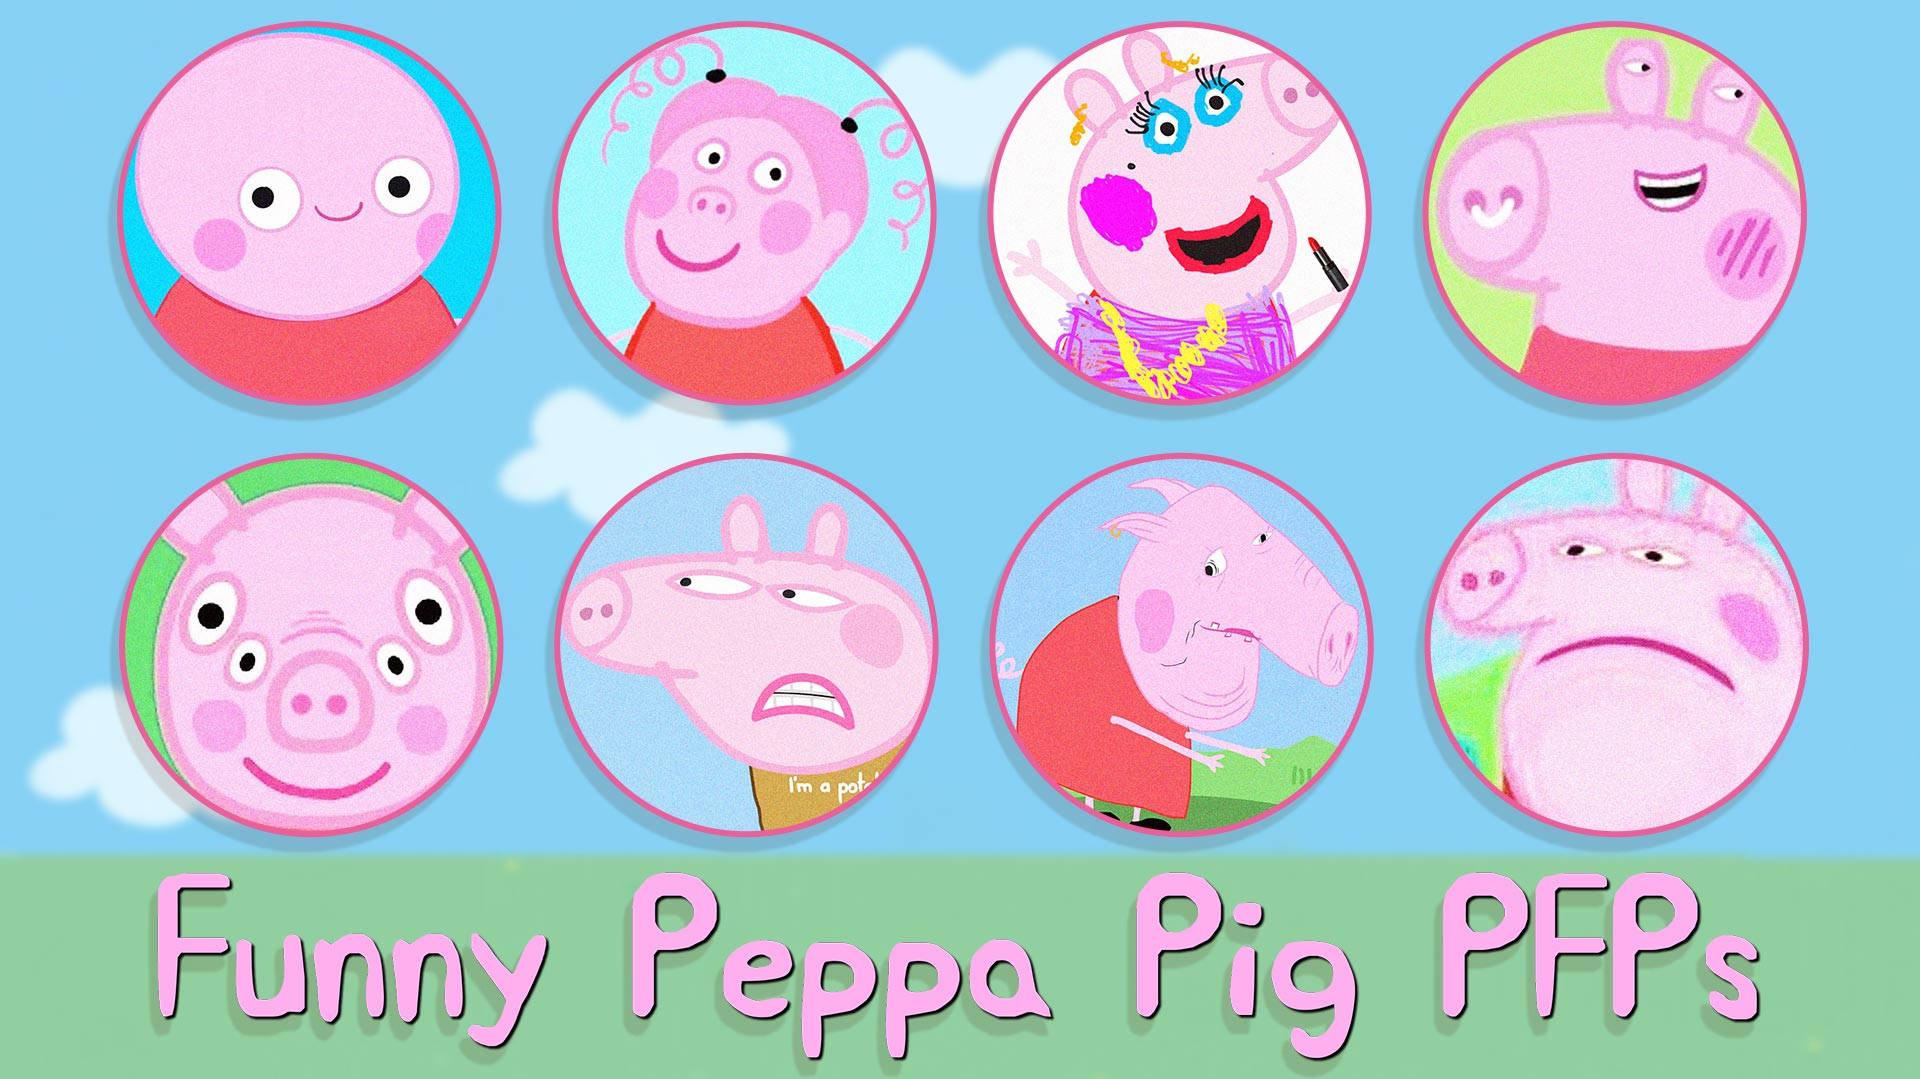 Baddie Peppa Pig Strikes A Fierce Pose Wallpaper